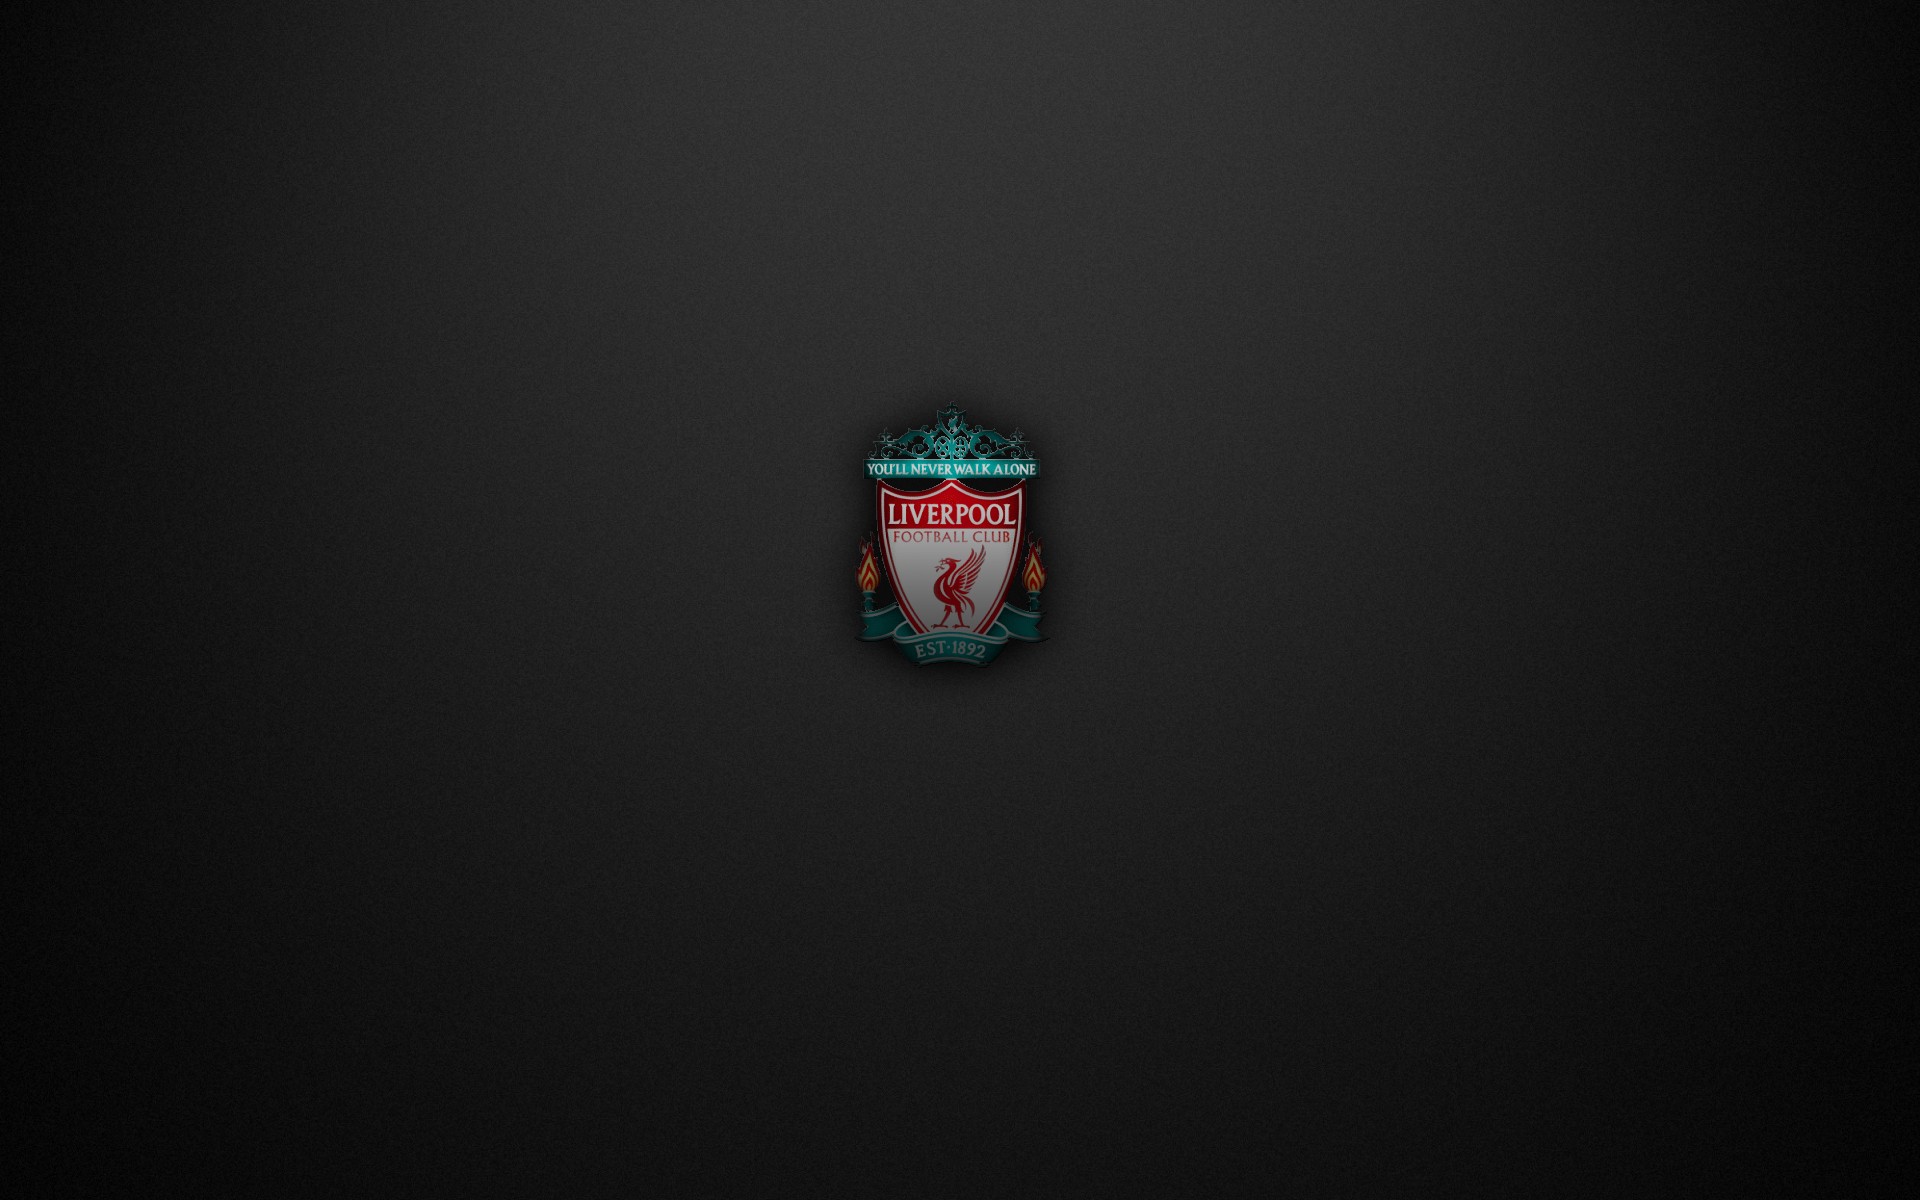 General 1920x1200 soccer sport minimalism soccer clubs simple background logo digital art Liverpool FC